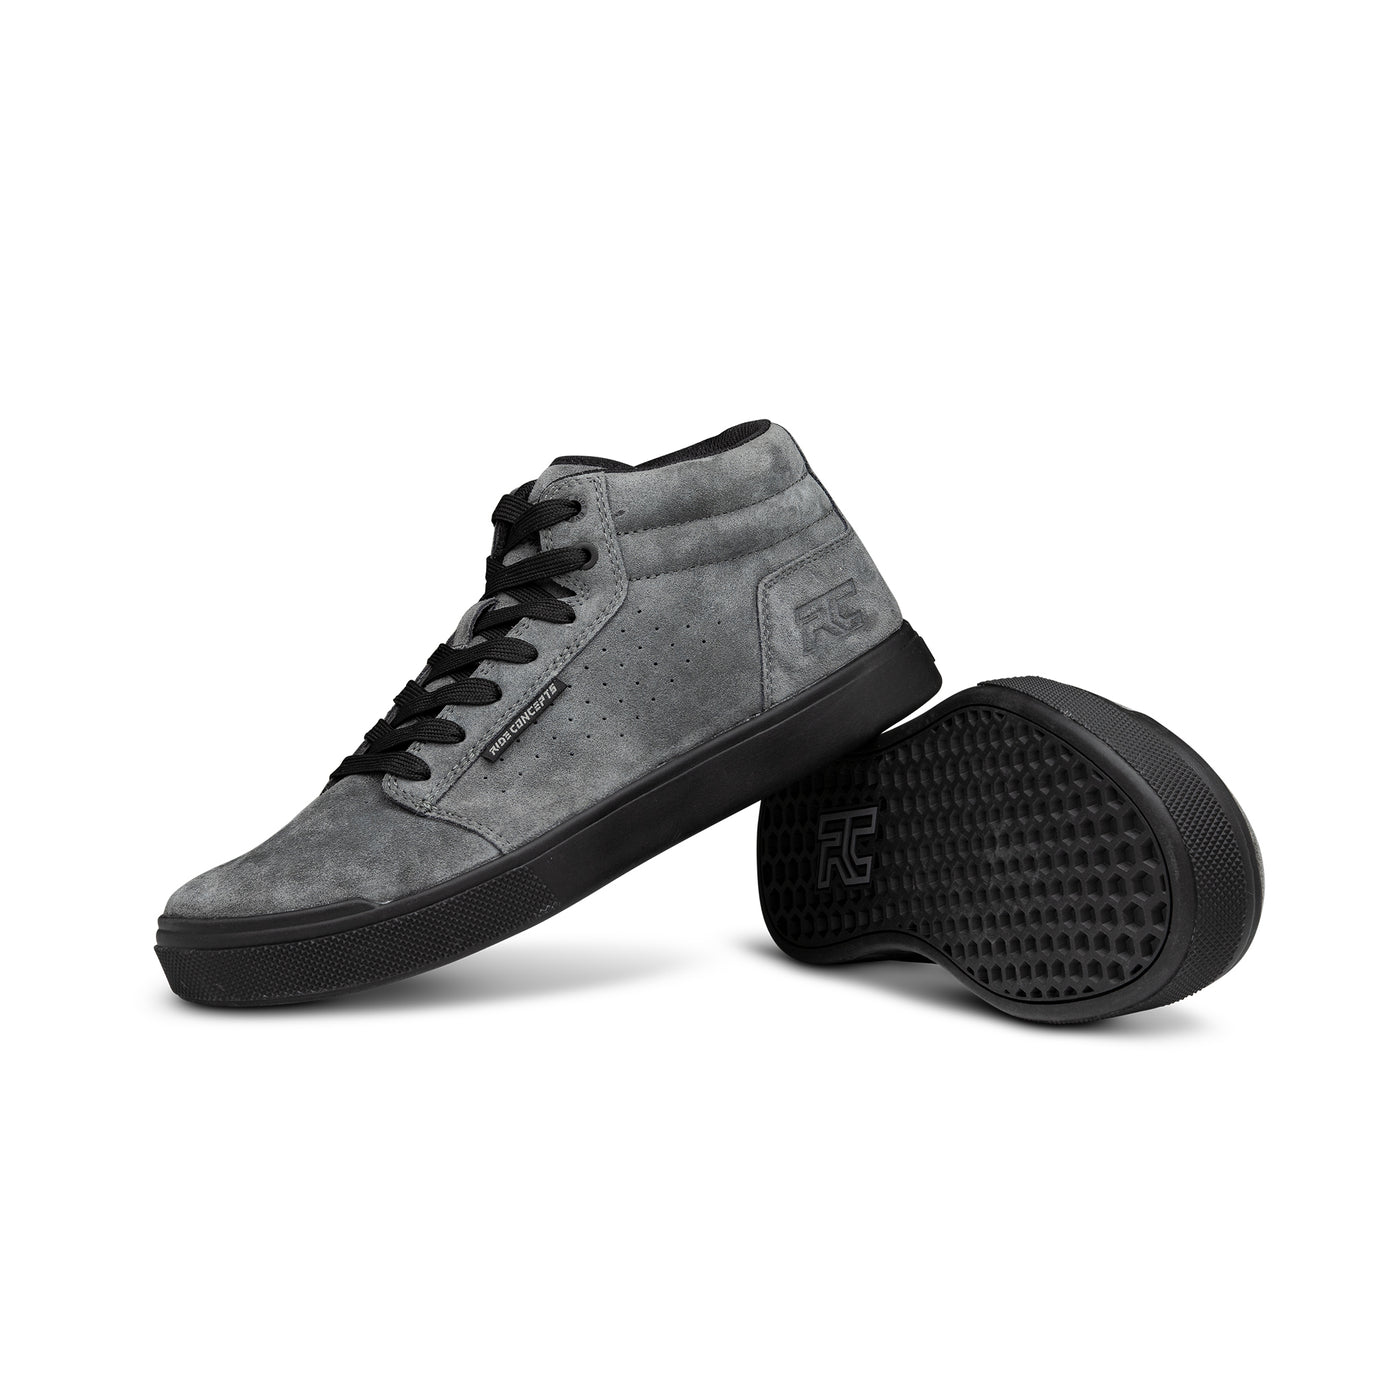 Ride Concepts Men's Vice Mid MTB Shoe - Charcoal and Black